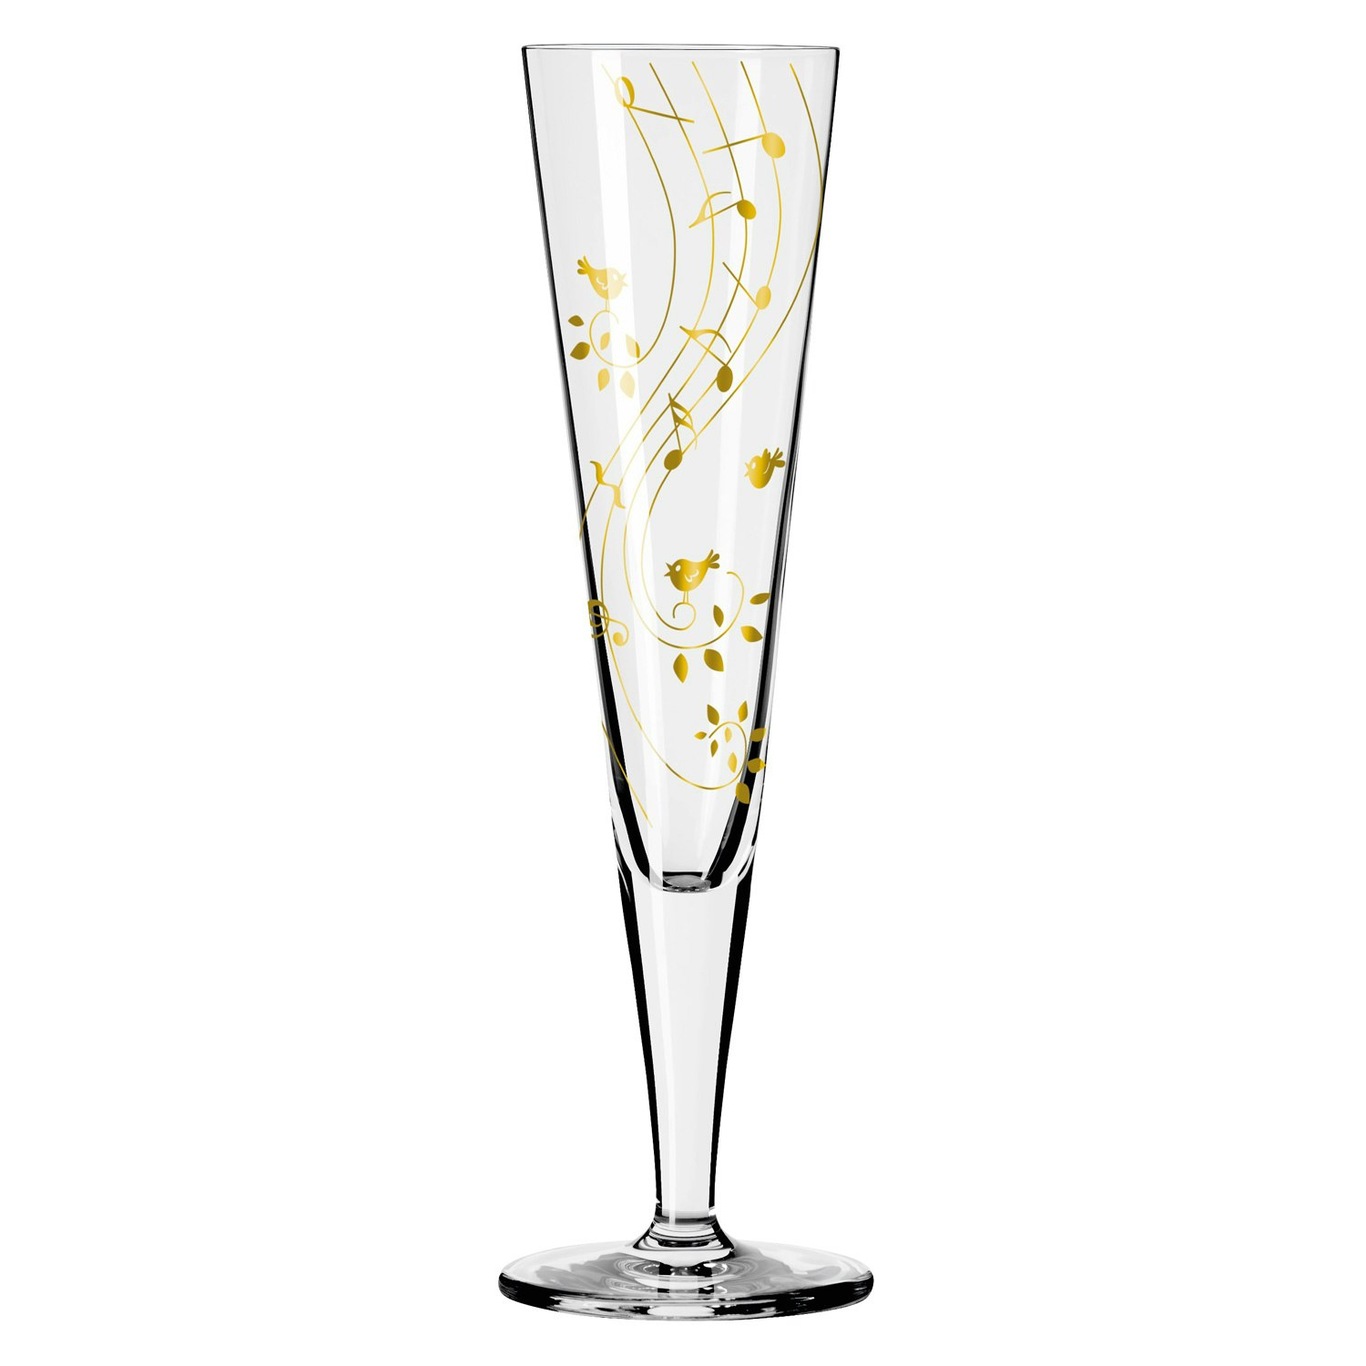 Goldnacht Champagnerglas, NO: 2